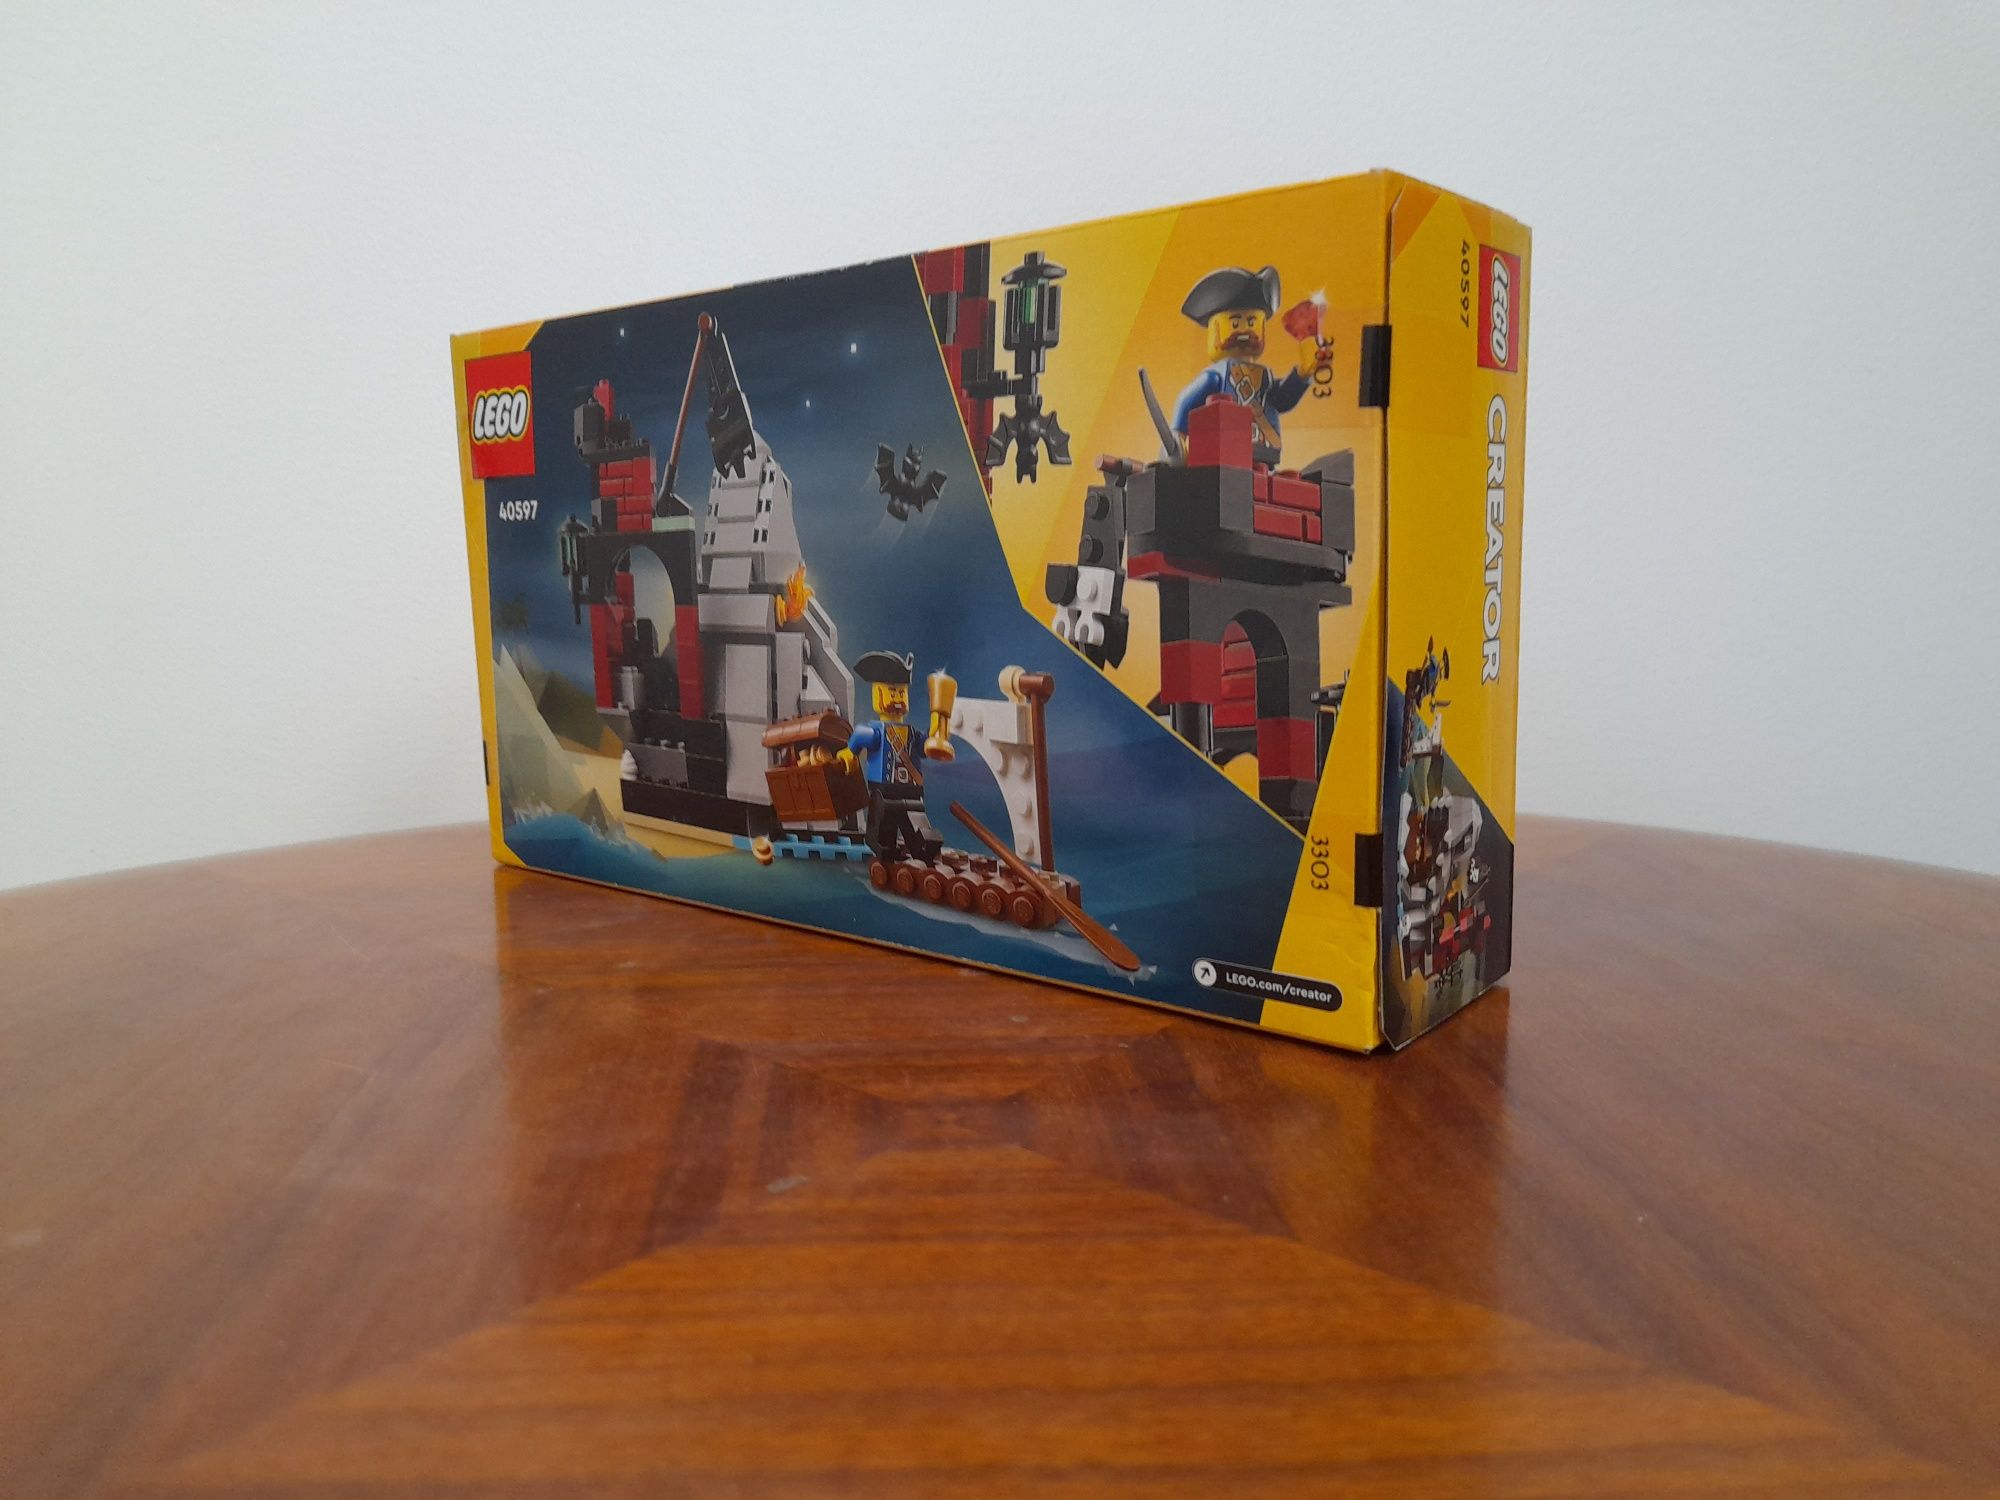 Lego NOVO GWP 40597 "Scary Pirate Island"